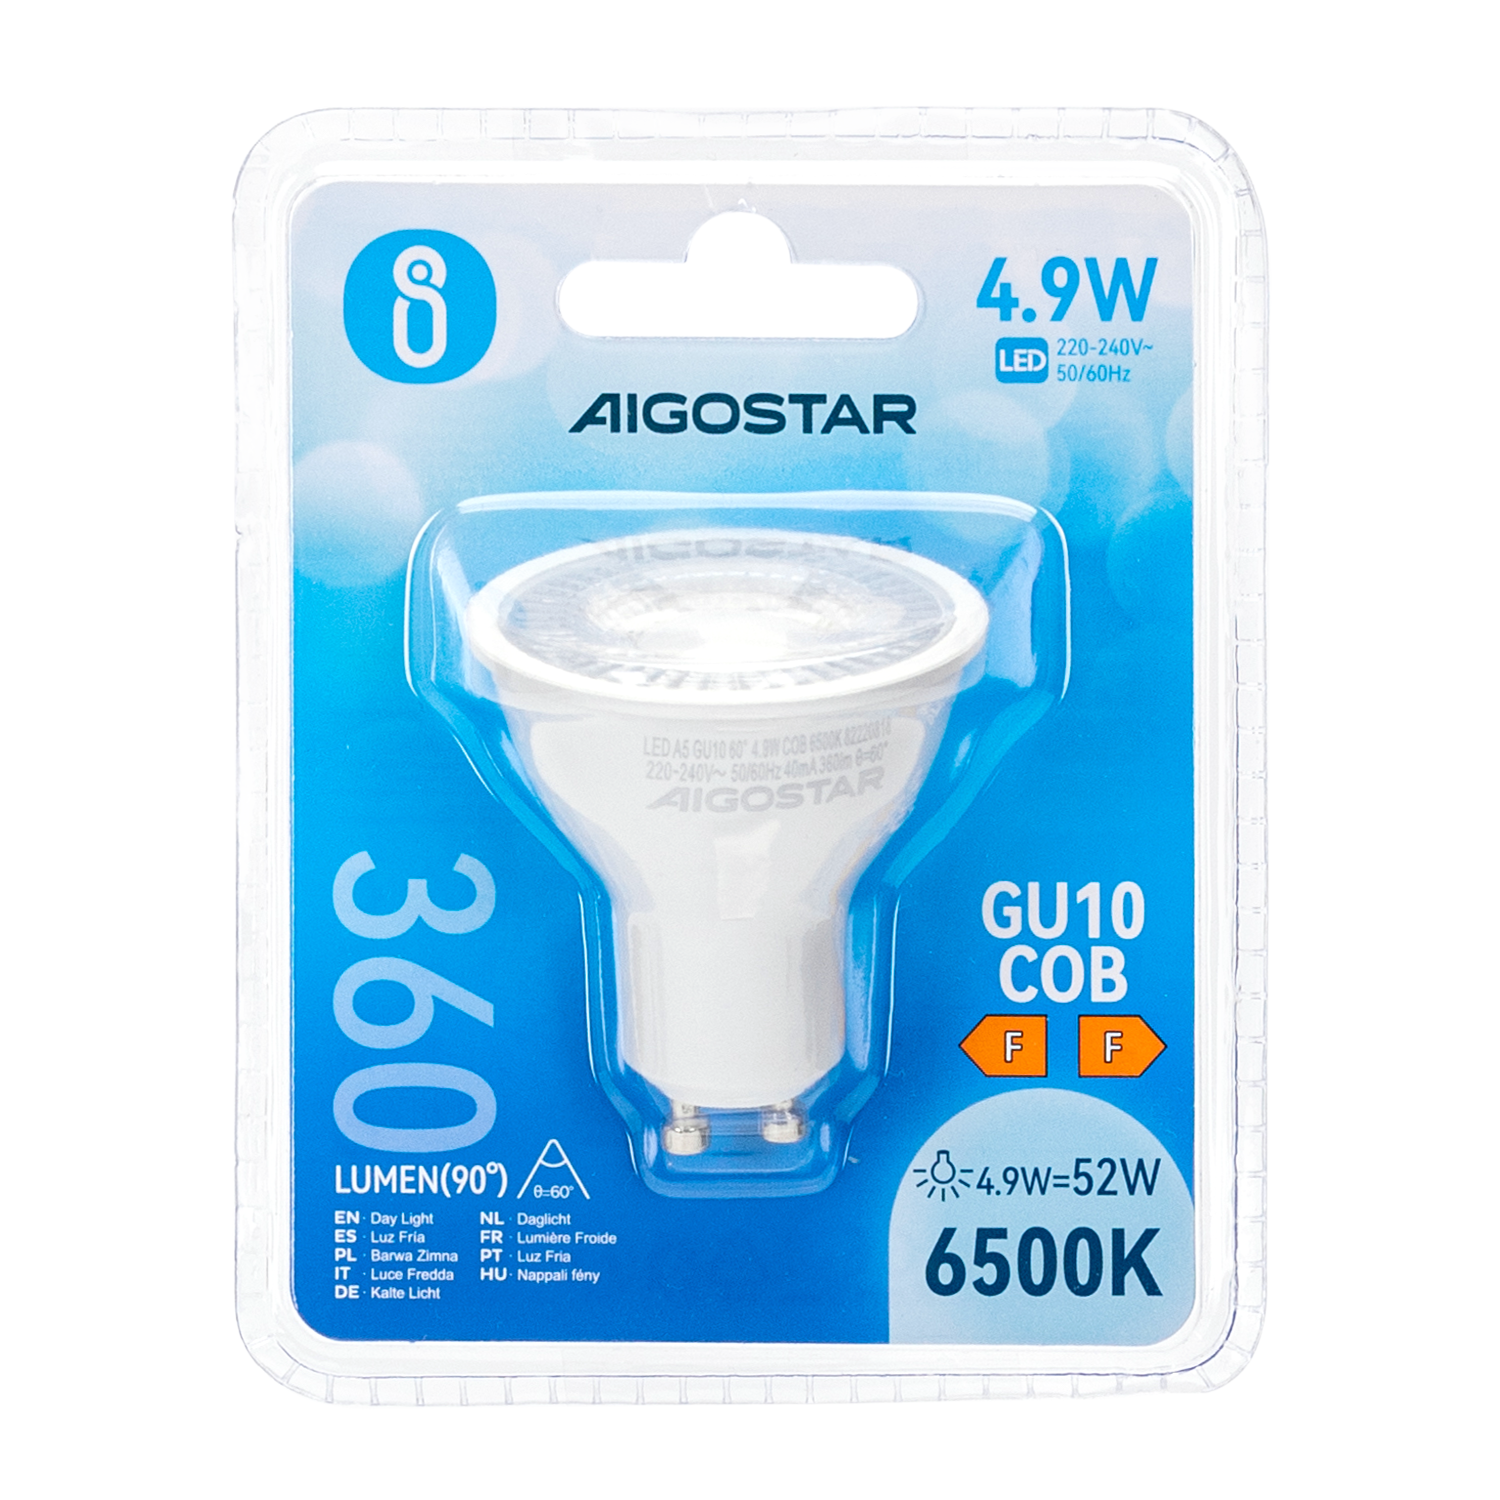 Aigostar LED GU10 COB 4.9W 3000-6500K 360LM